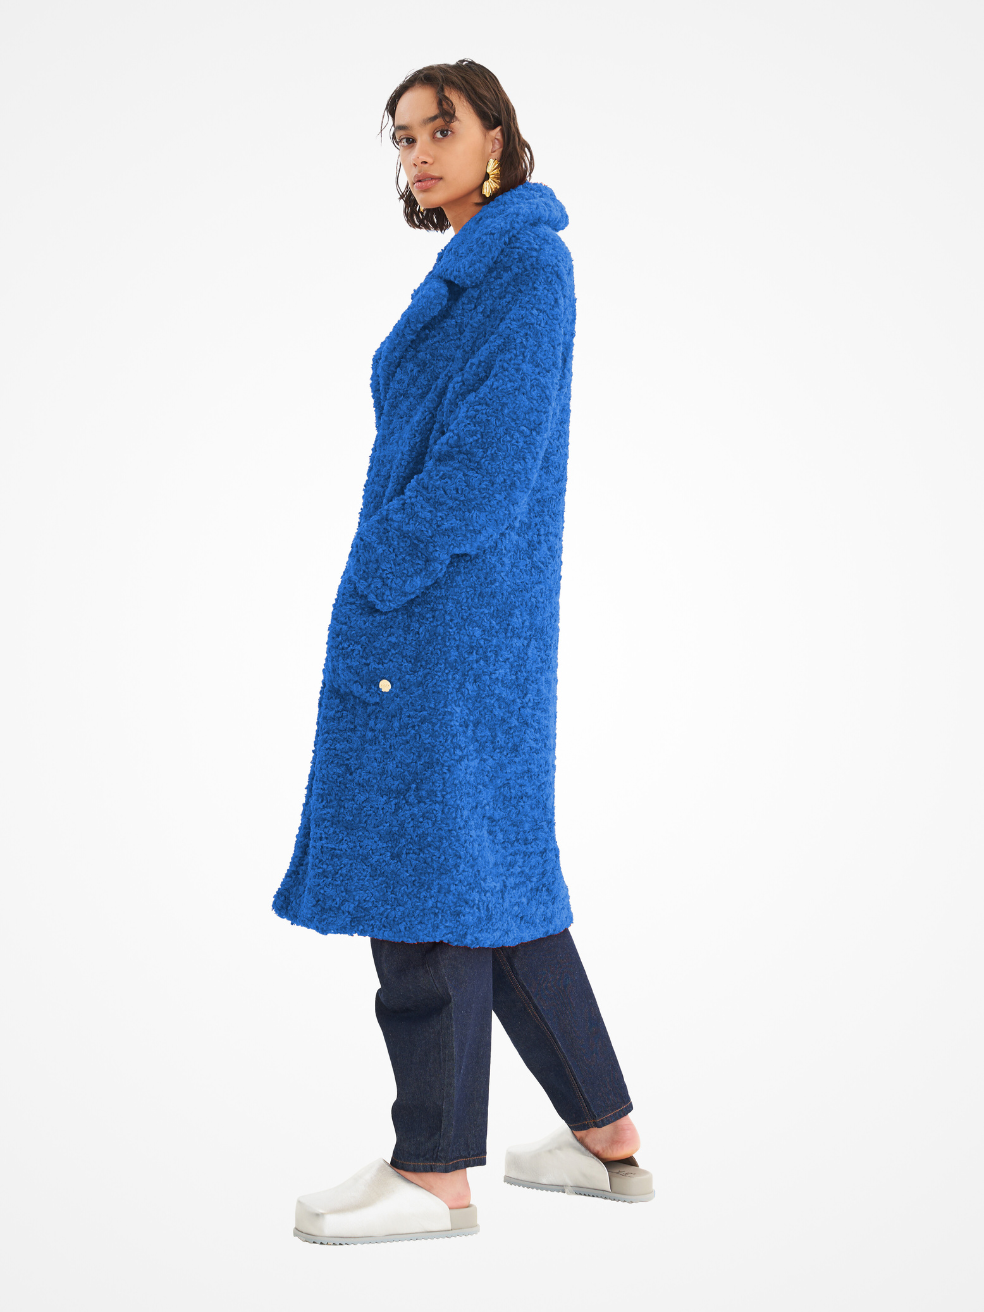 Ruby Blue Lapis Zero Waste Fashion Made in Canada Vegan Sherpa Curly